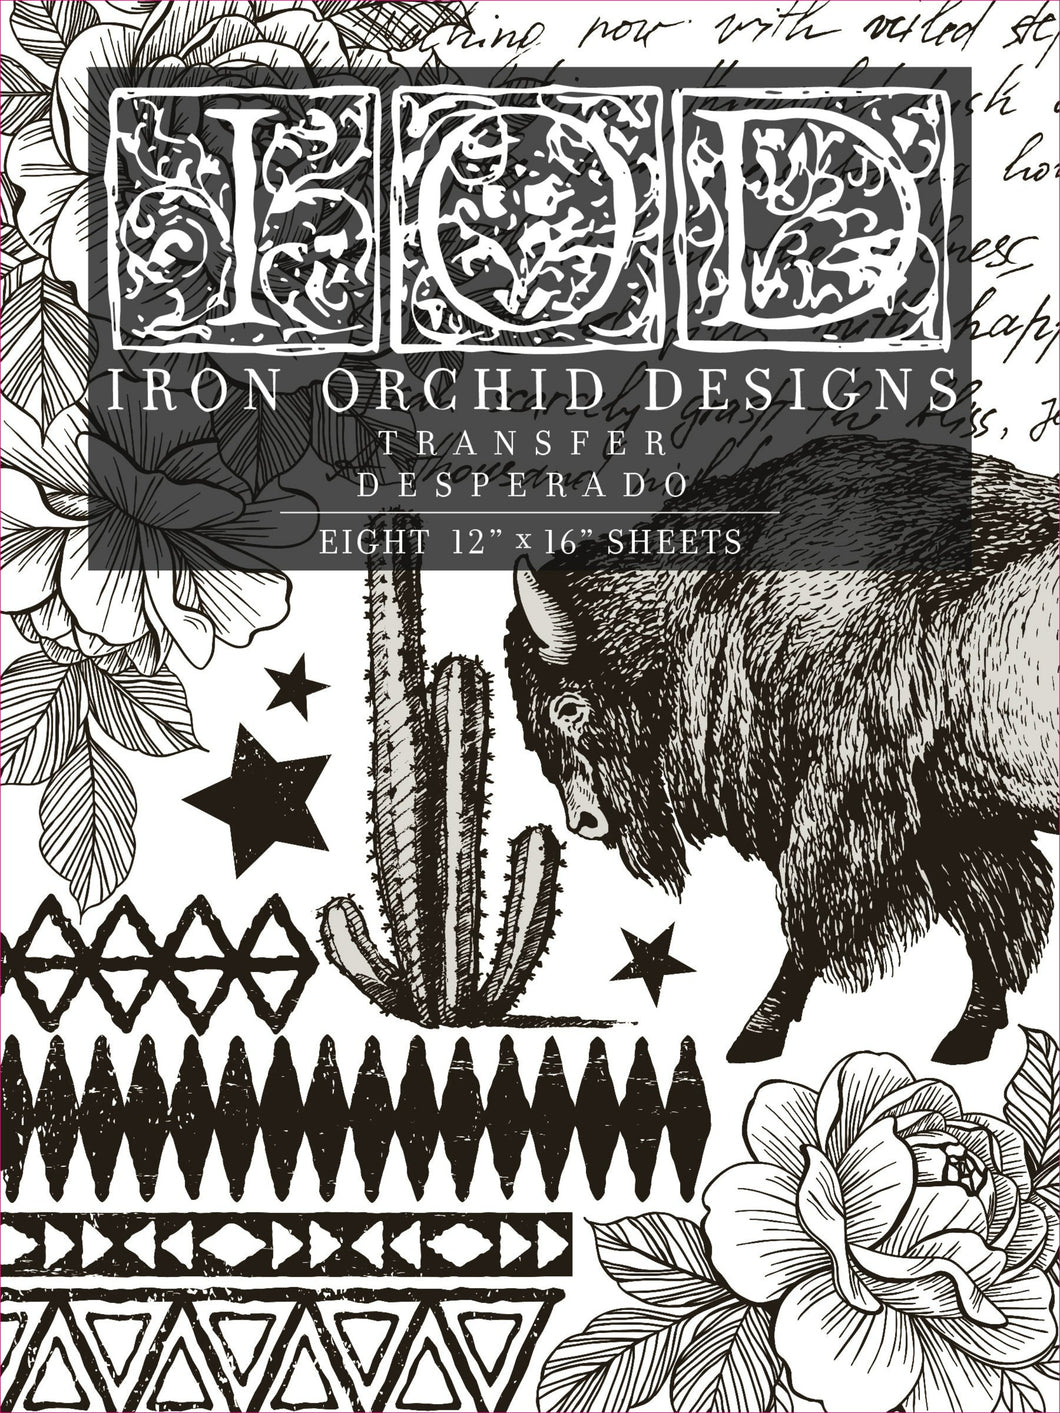 IOD Desperado Transfer, Iron Orchid Designs, Cover